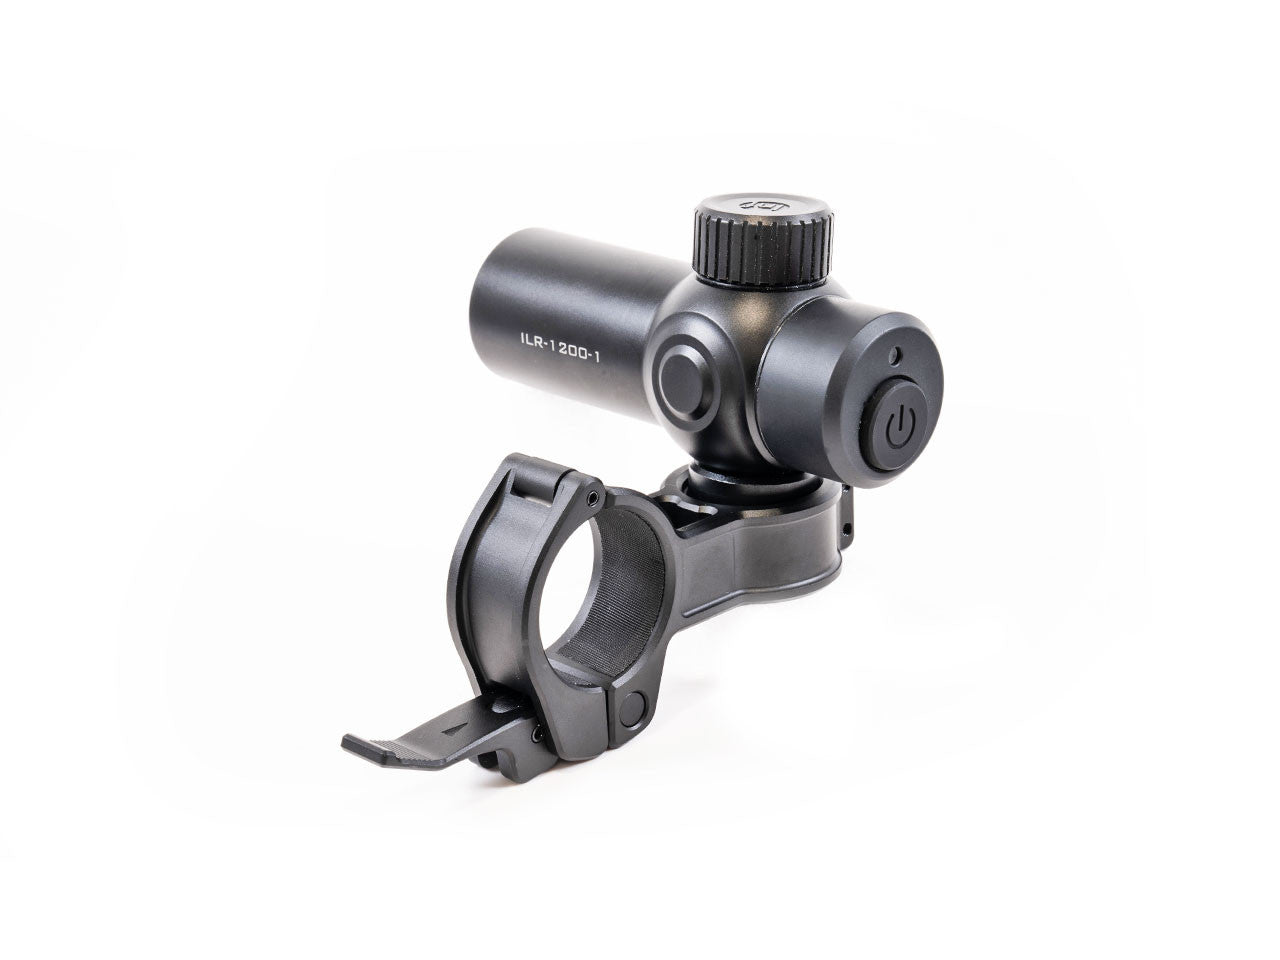 InfiRay Outdoor ILR-1200 Laser Rangefinder for BOLT